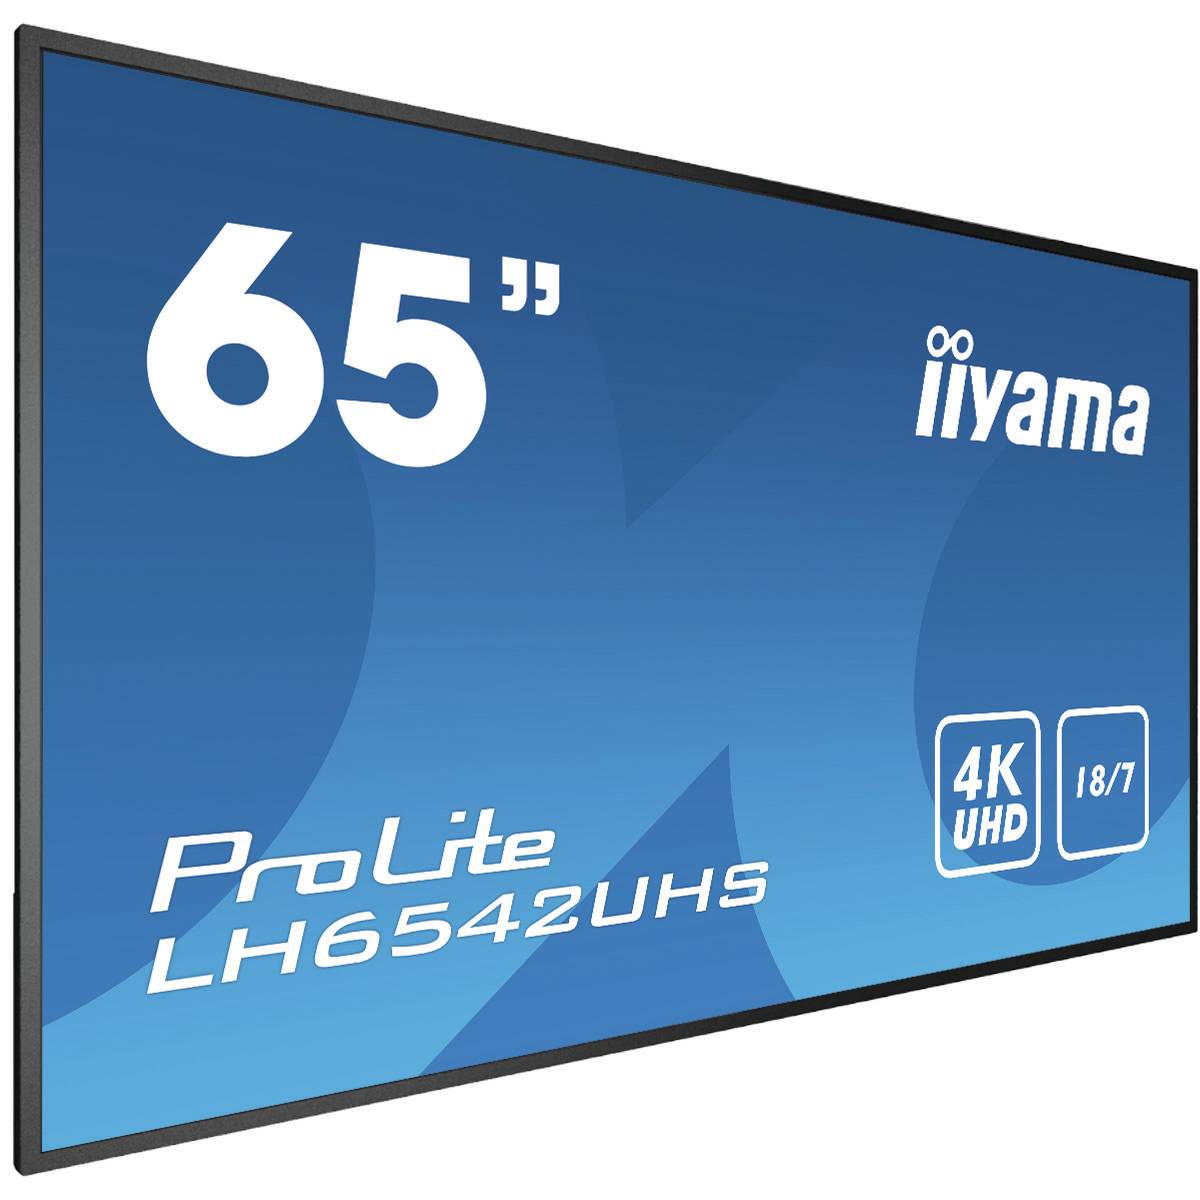 Rca Informatique - image du produit : 64.5IN LED 16:9 LH6542UHS-B3 3840X2160 1200:1 9MS VGA/HDMI/US